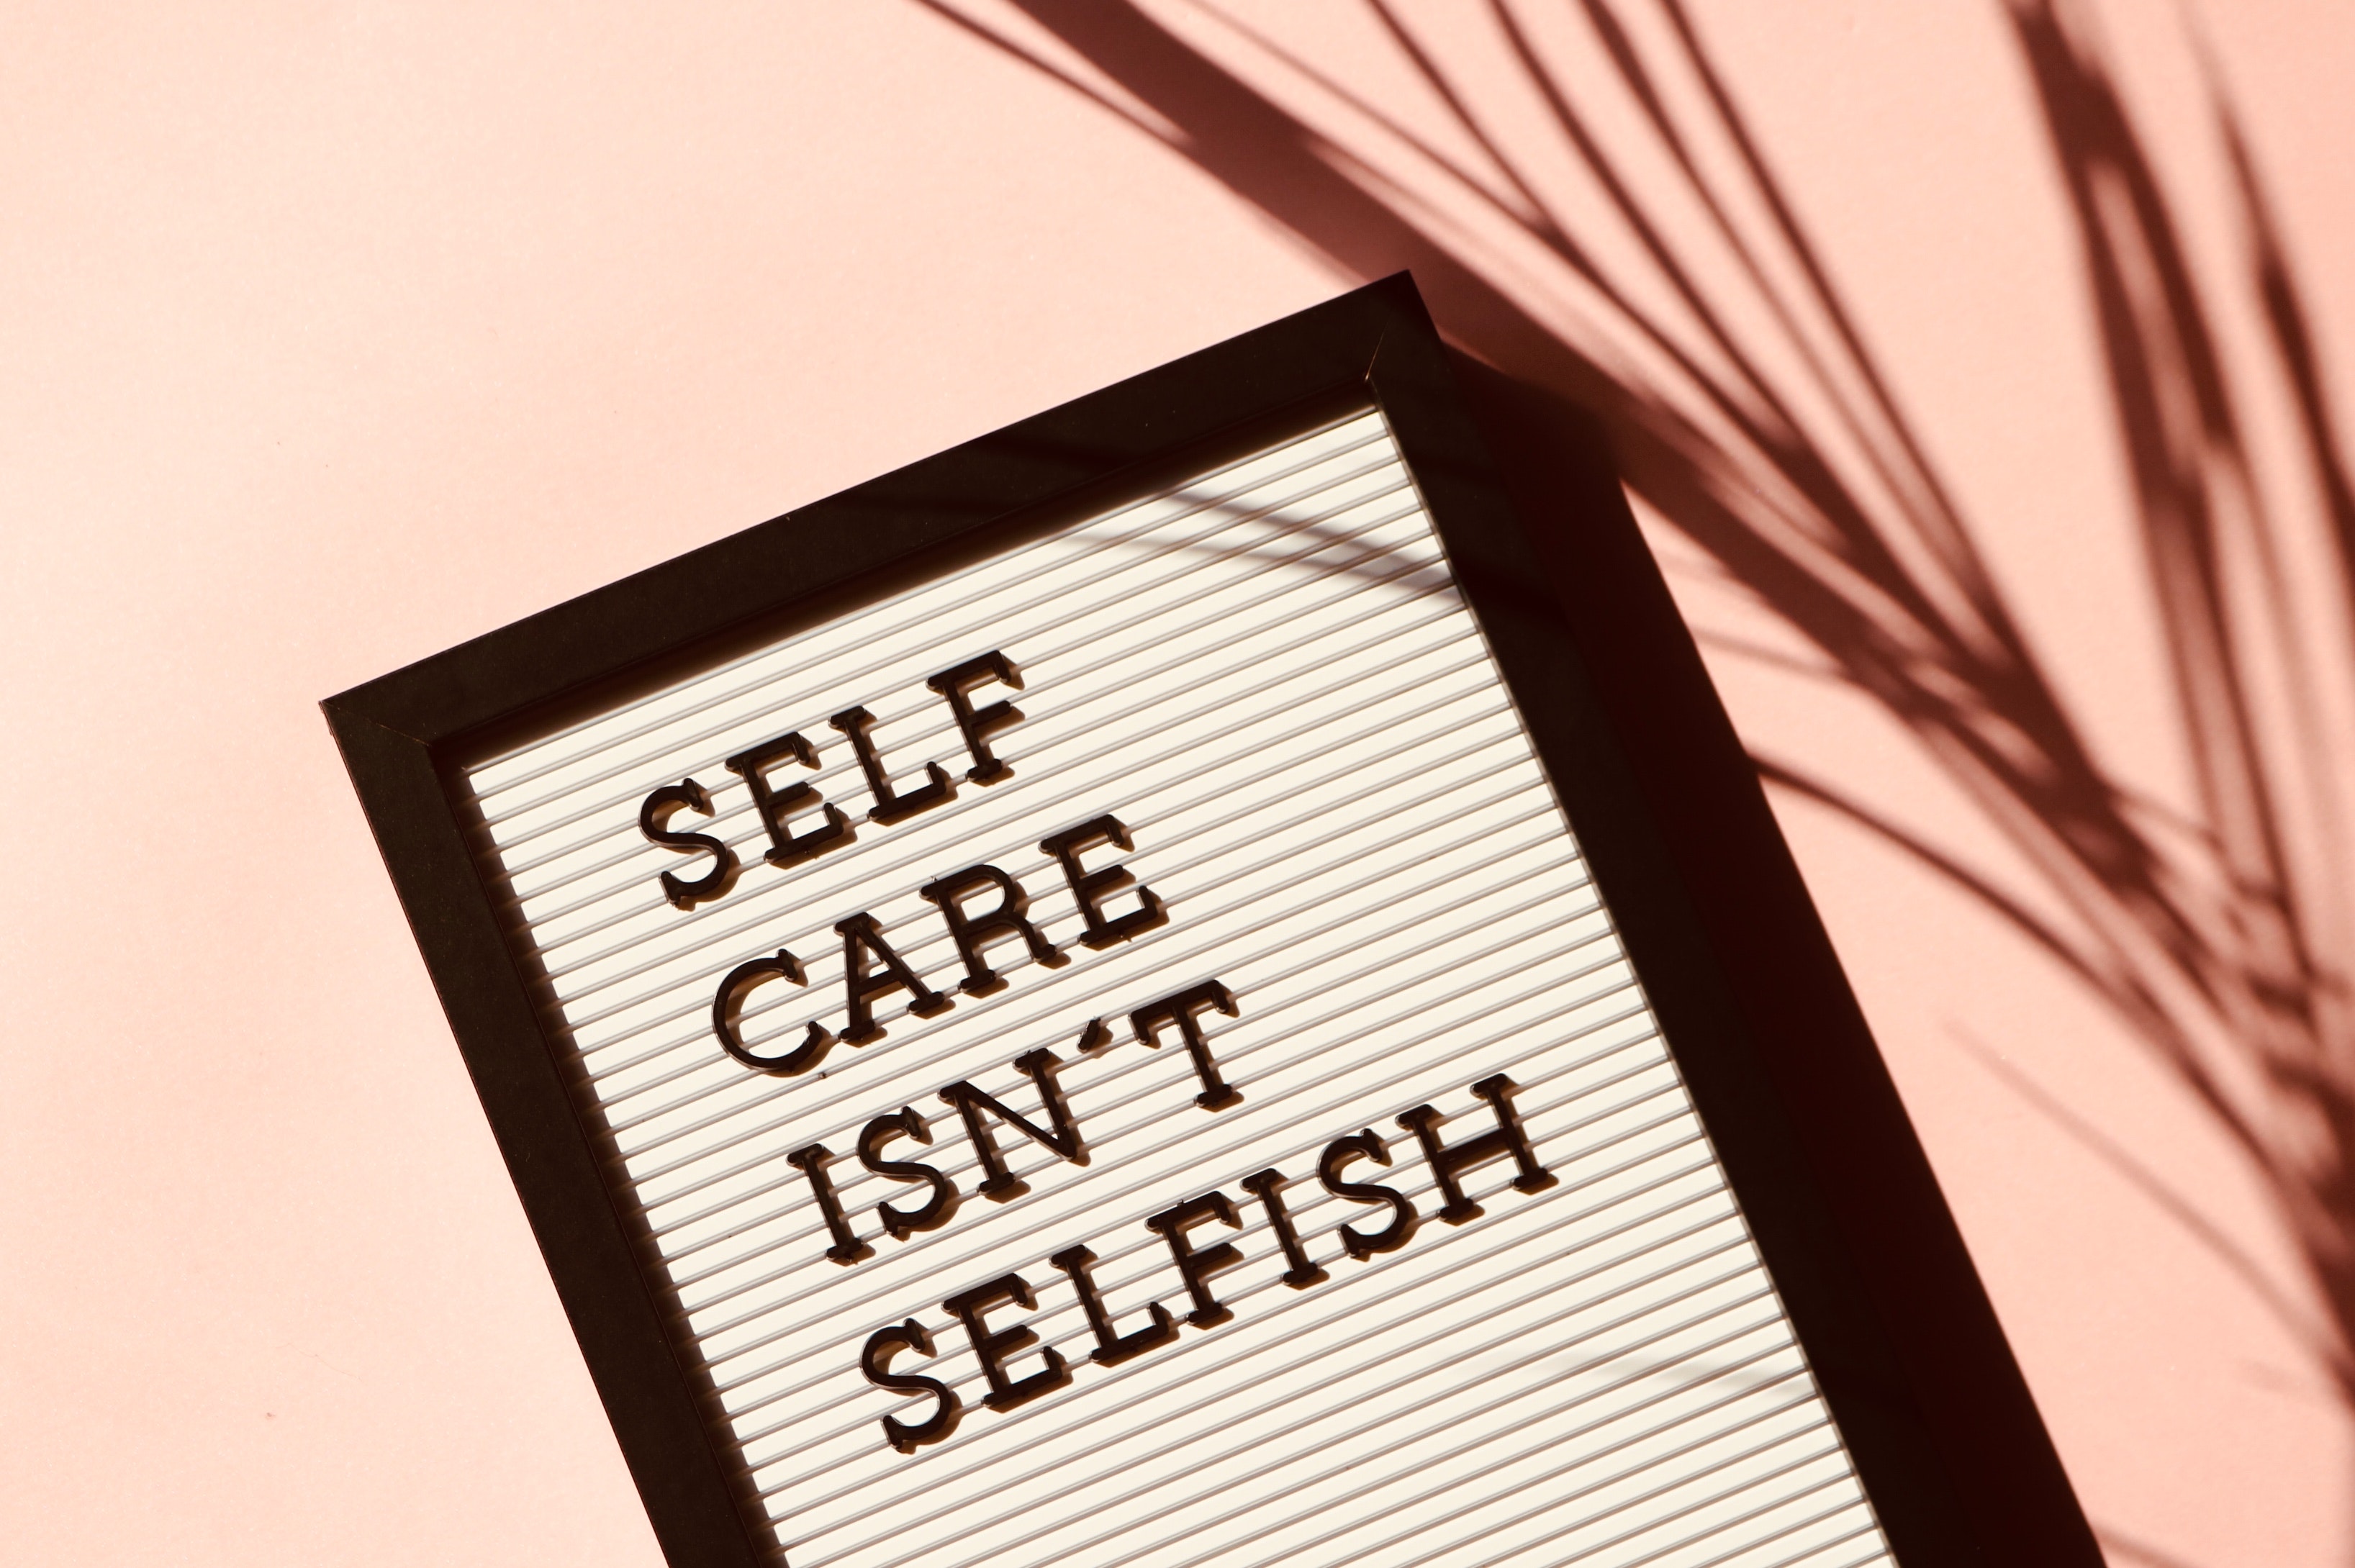 Words say "self care isn't selfish"